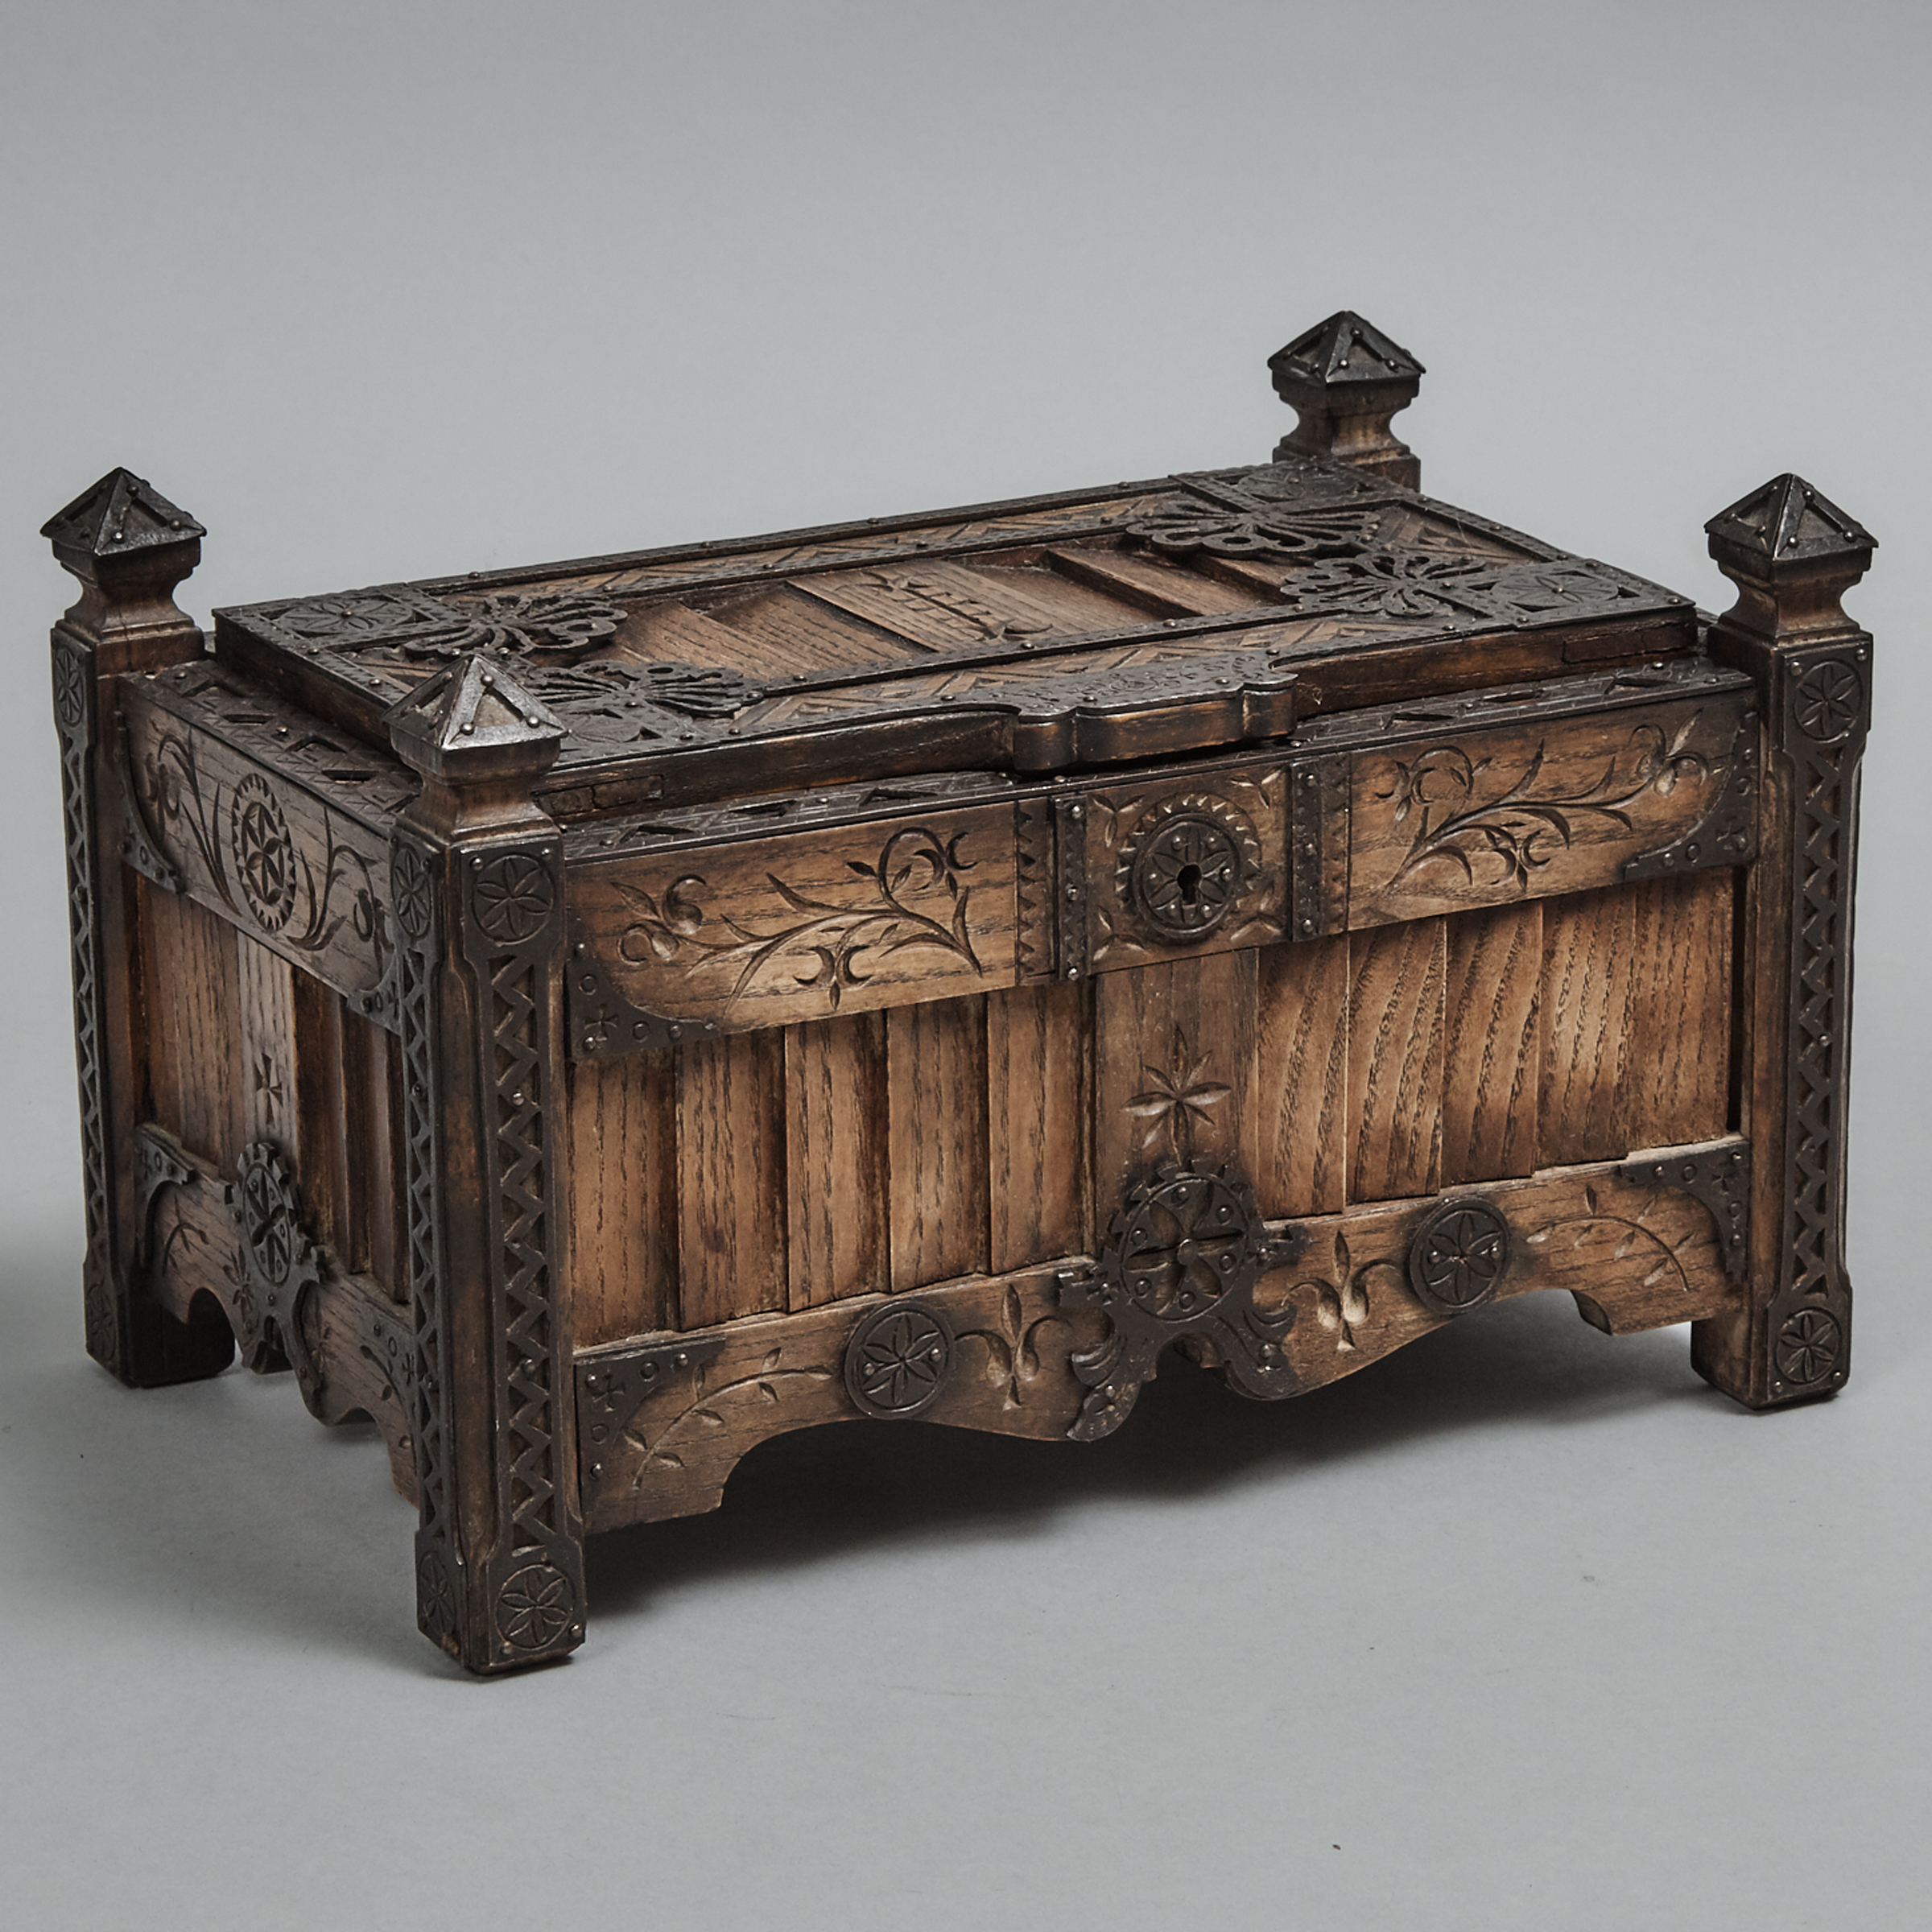 Continental Renaissance Revival Iron Overlaid Oak Table Casket, early 20th century